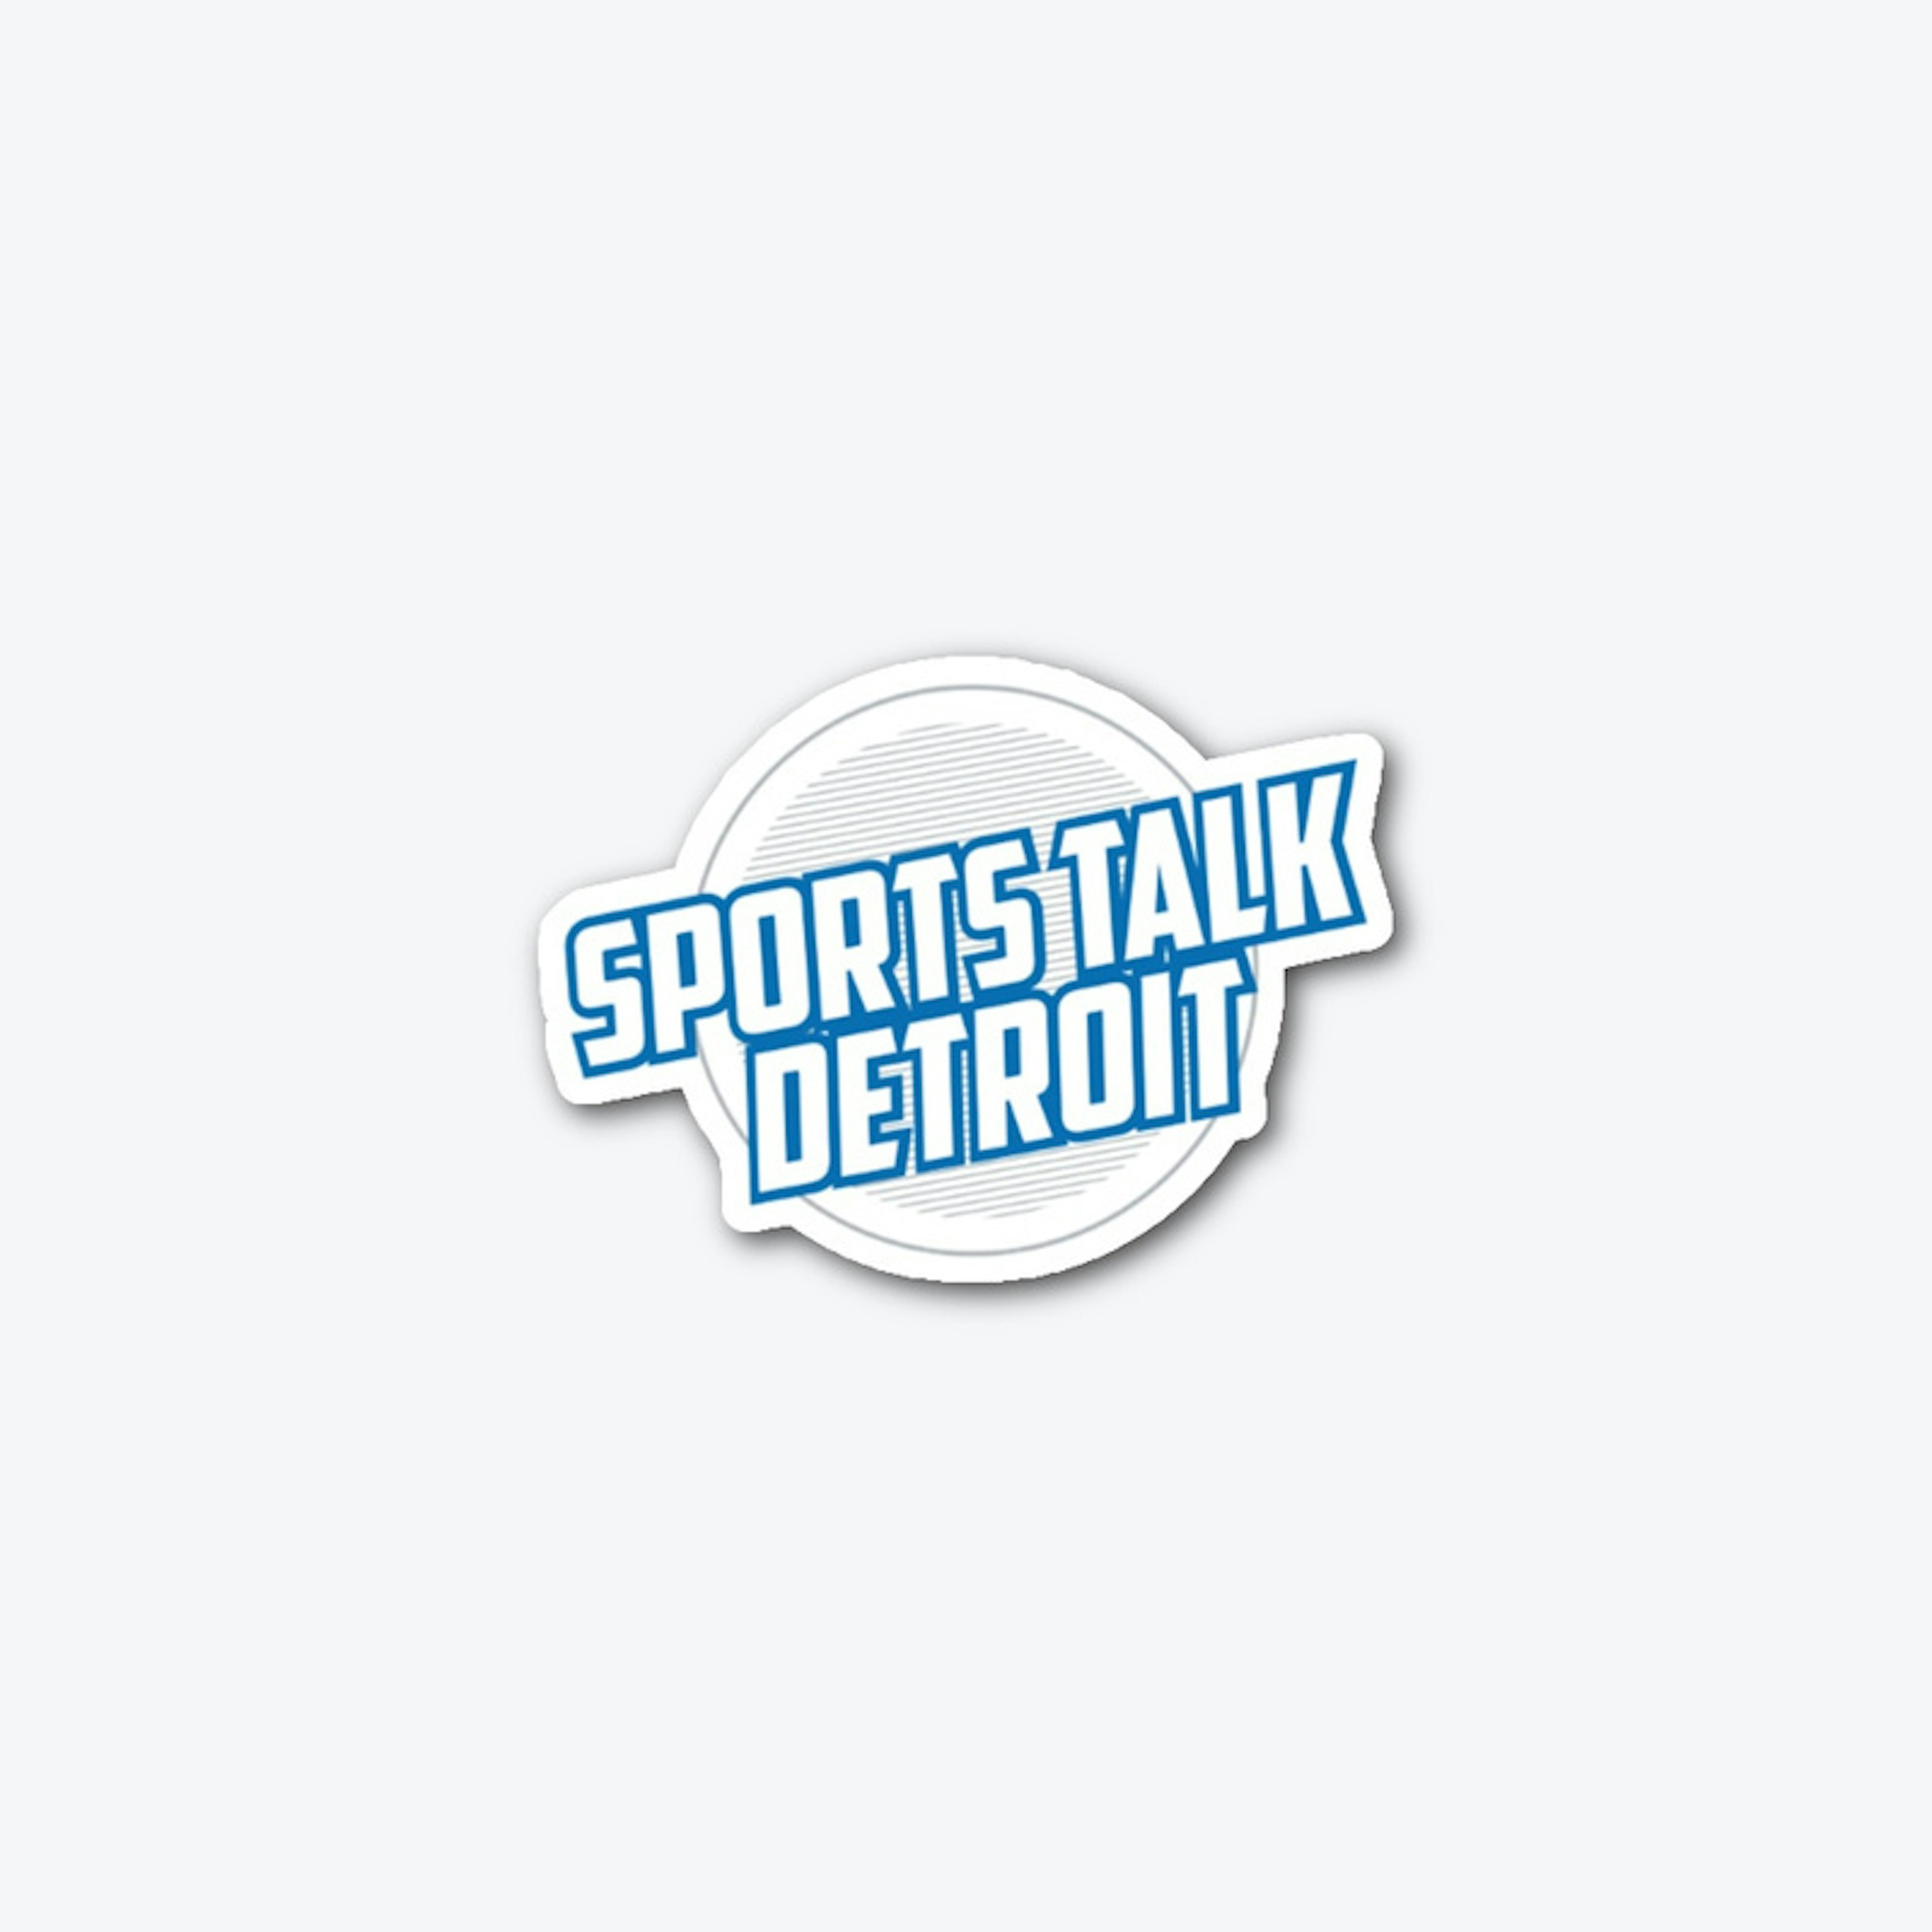 Sports Talk Detroit